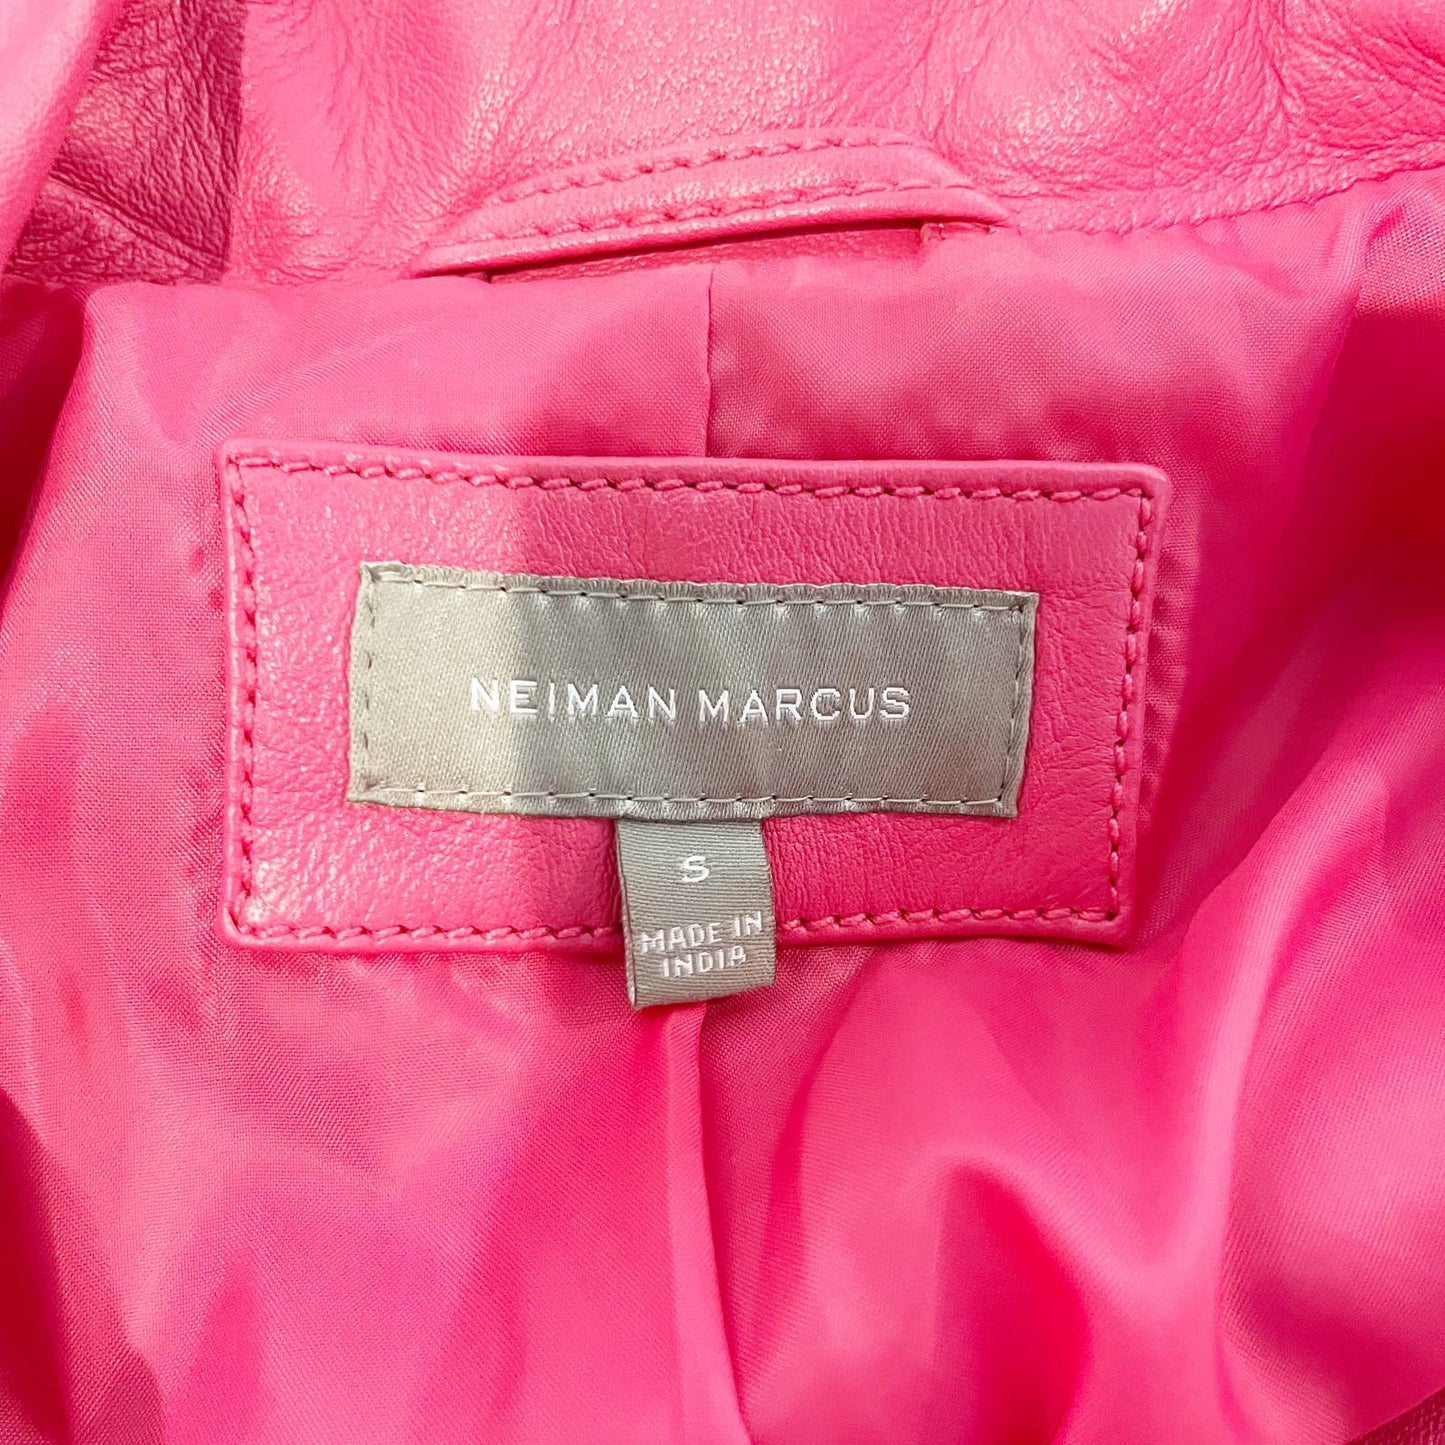 Neiman Marcus 100% Leather Moto Biker Zip Up Jacket Pockets Pink Small